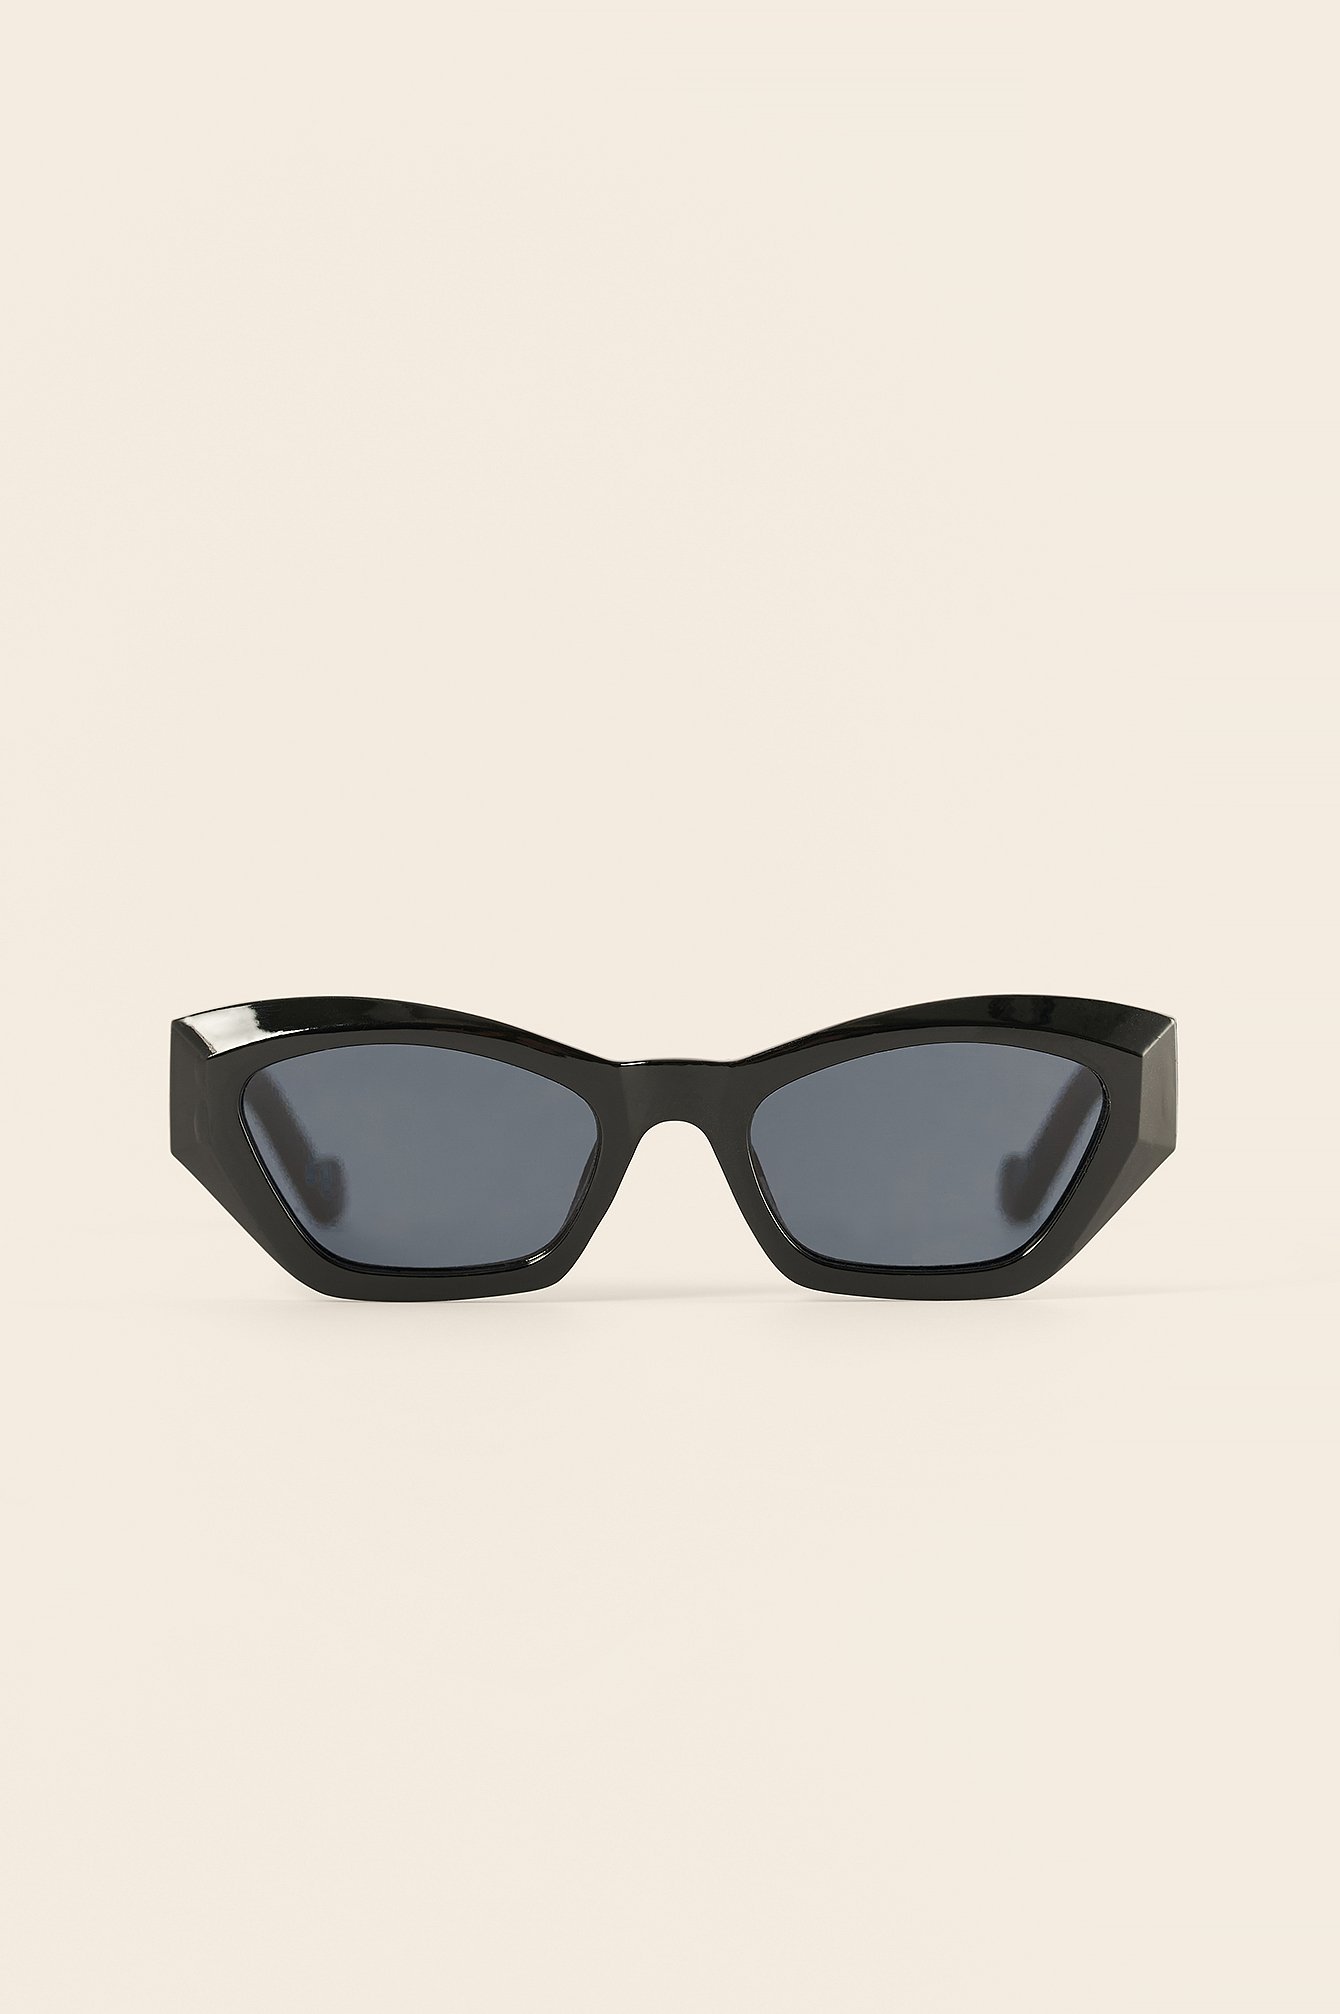 Black Curved Cat Eye Sunglasses